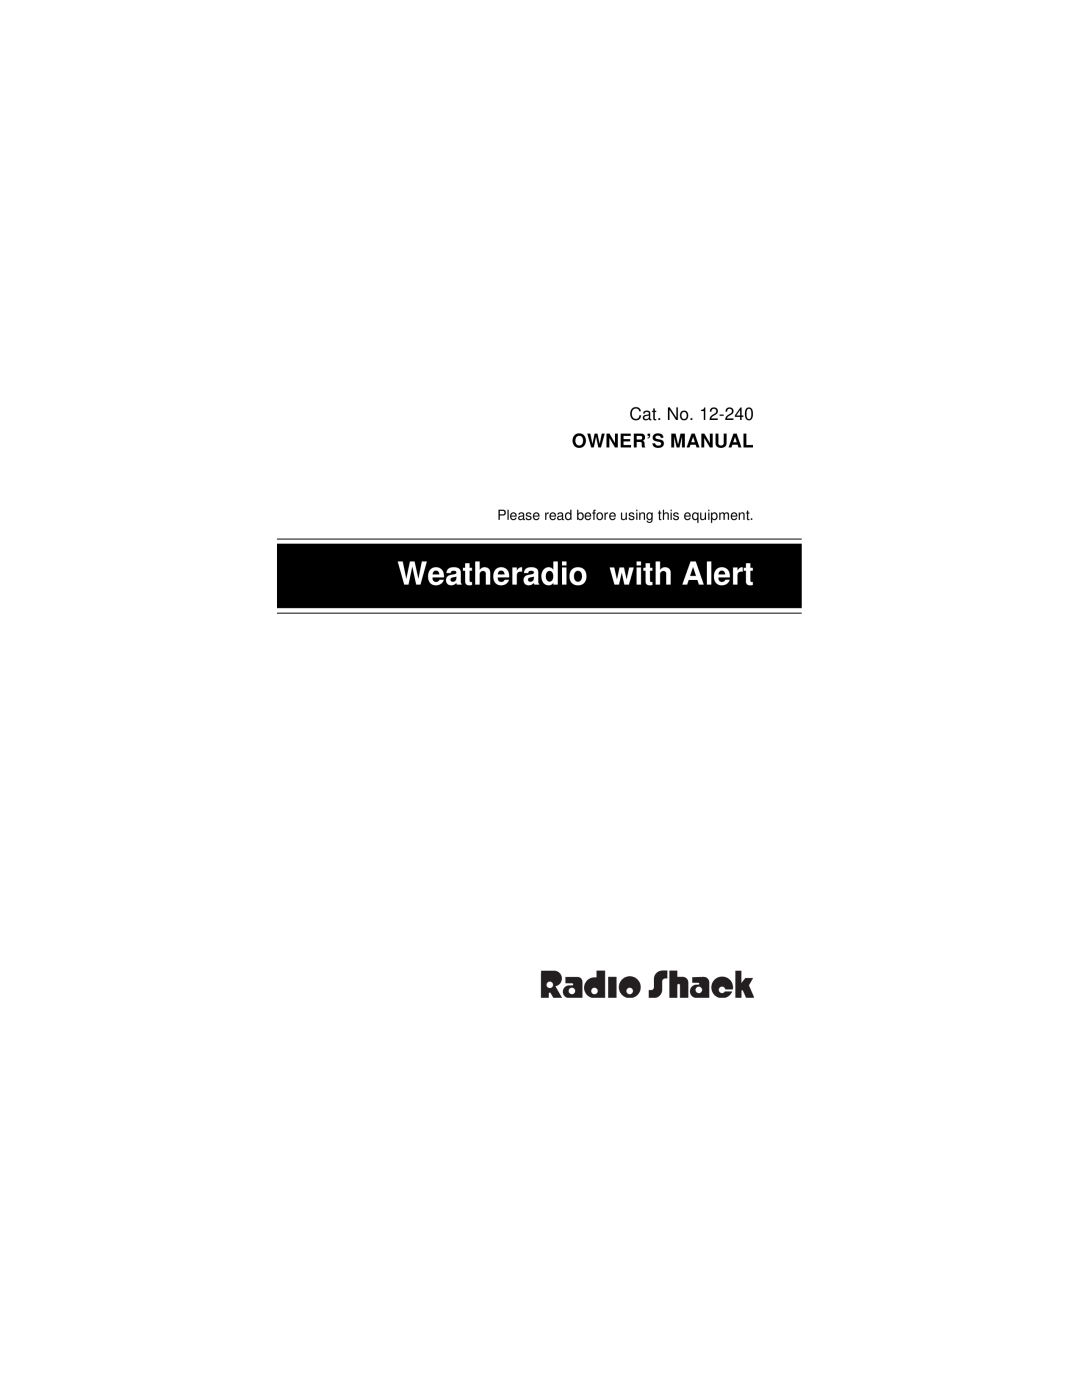 Radio Shack 12-240 owner manual Weatheradioâ with Alert 